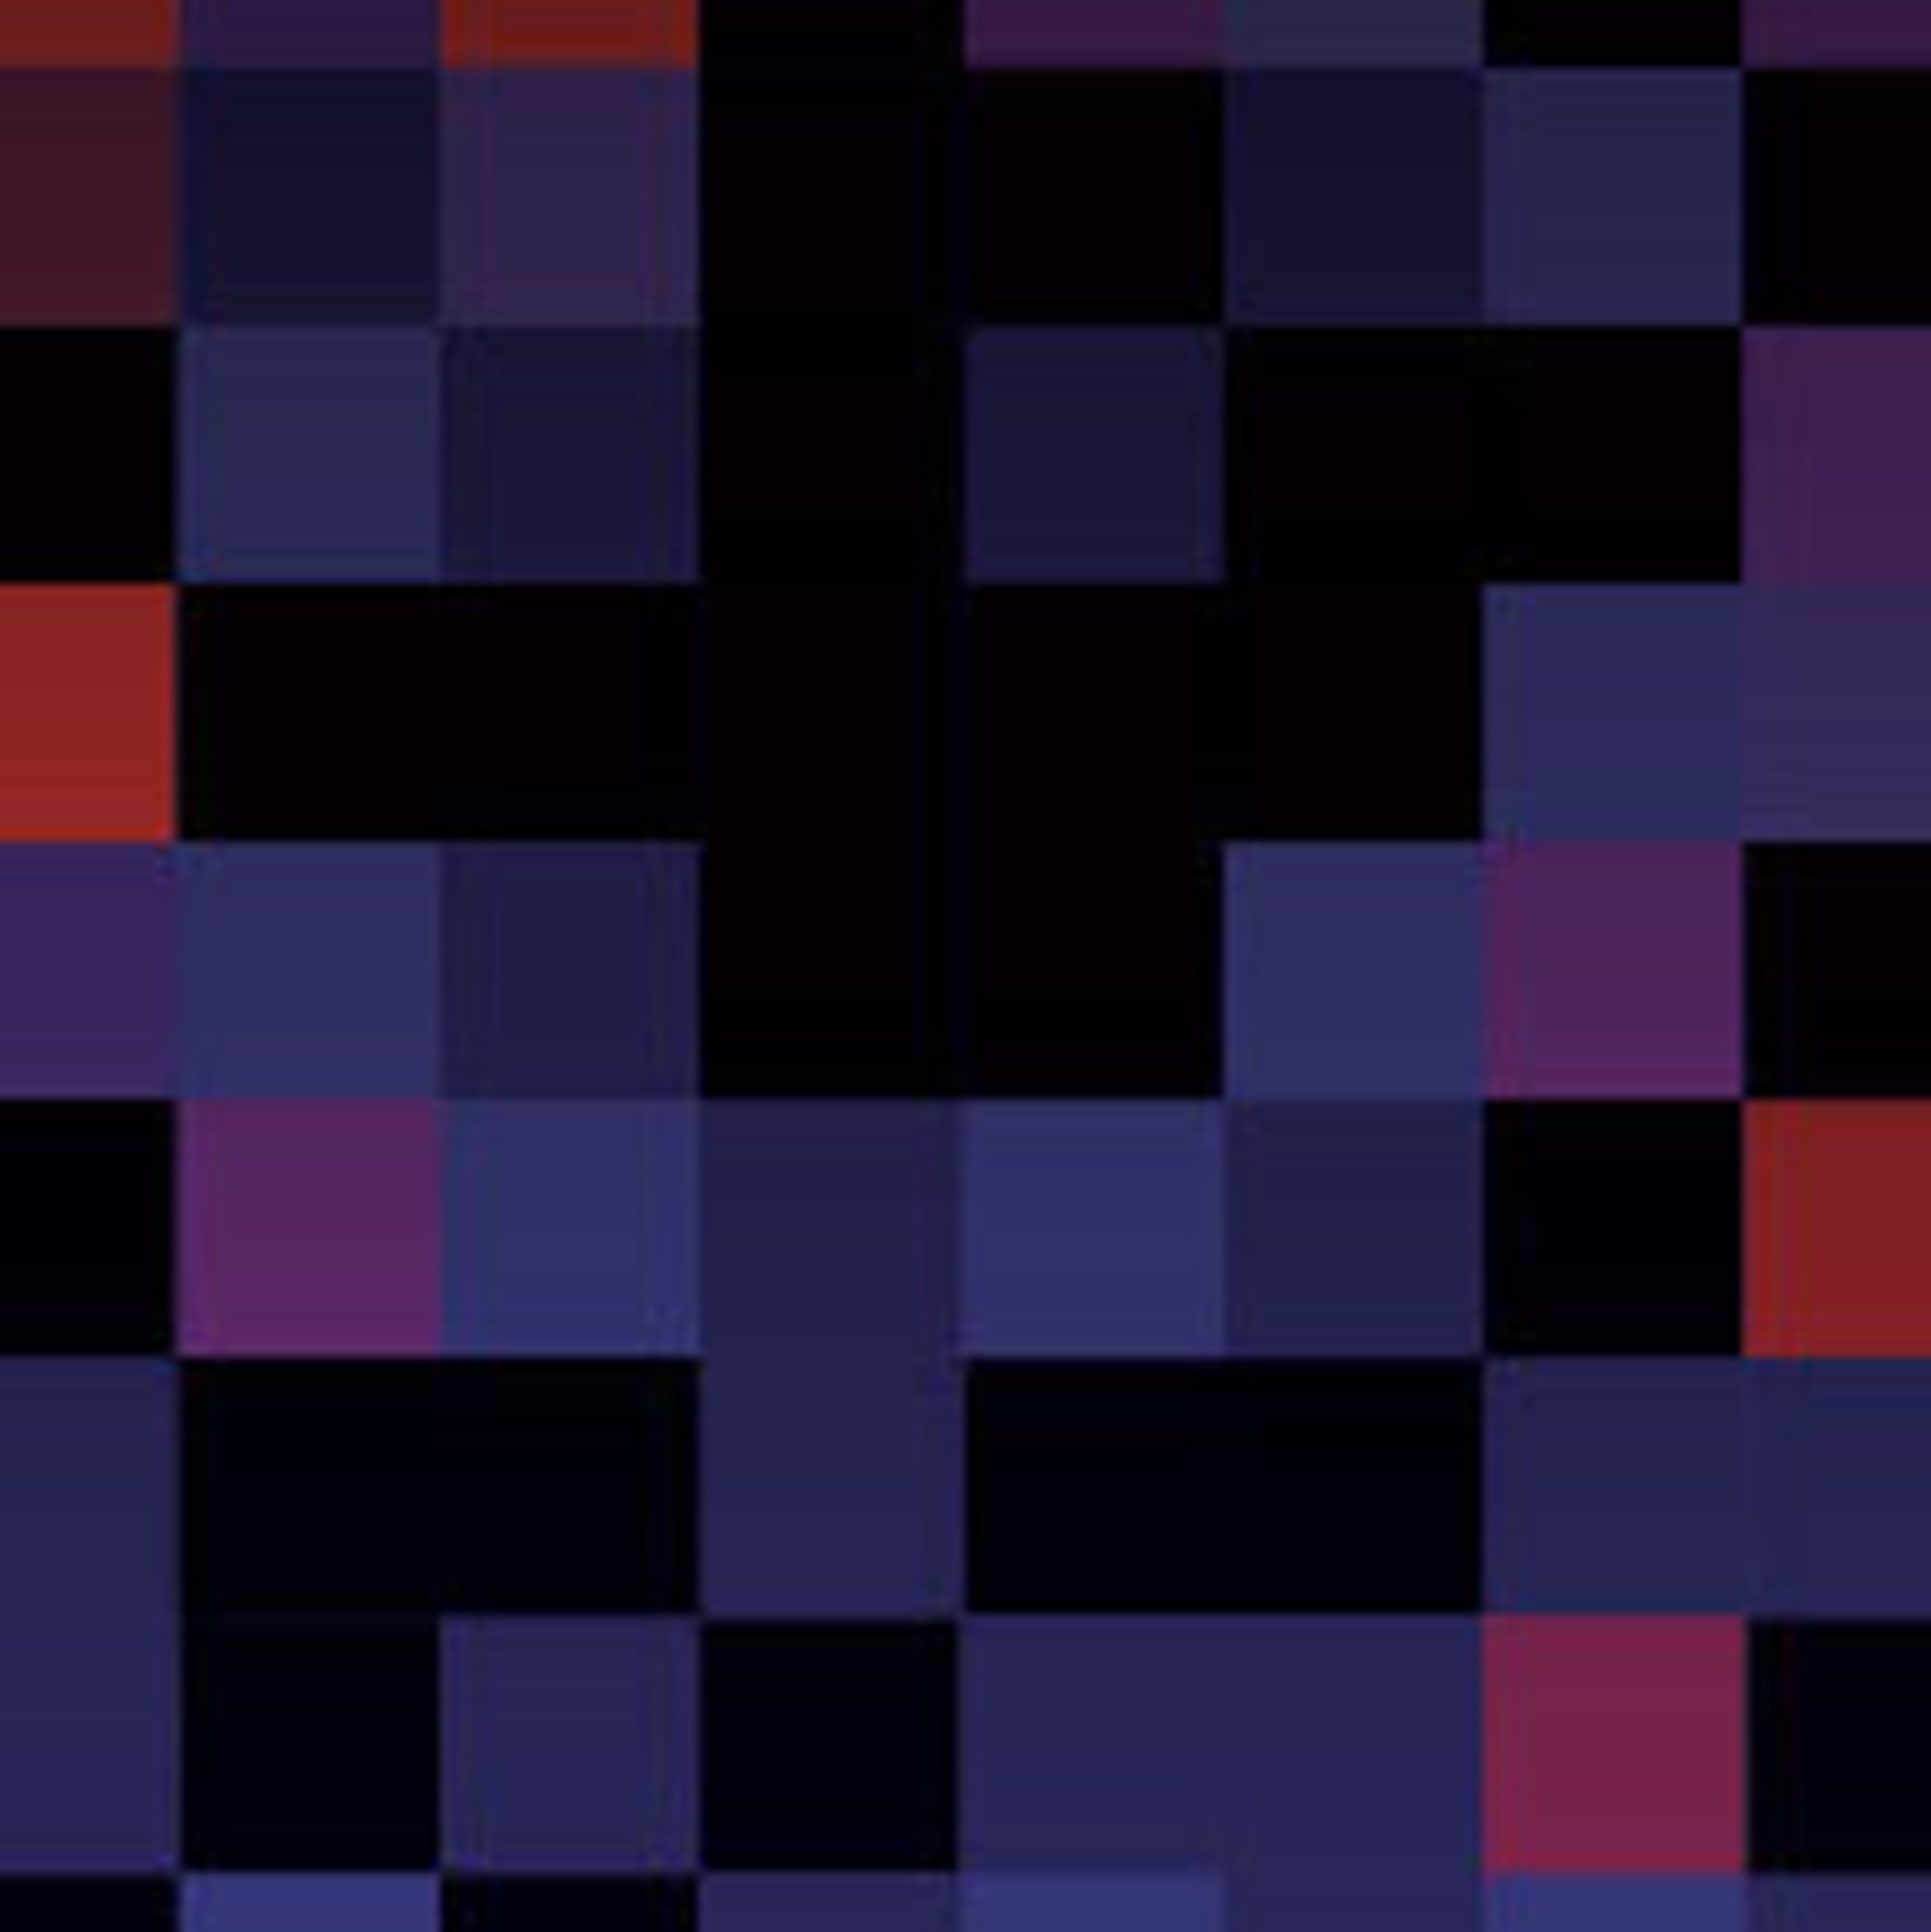 Minecraft Obsidian Block – Pattern Crew